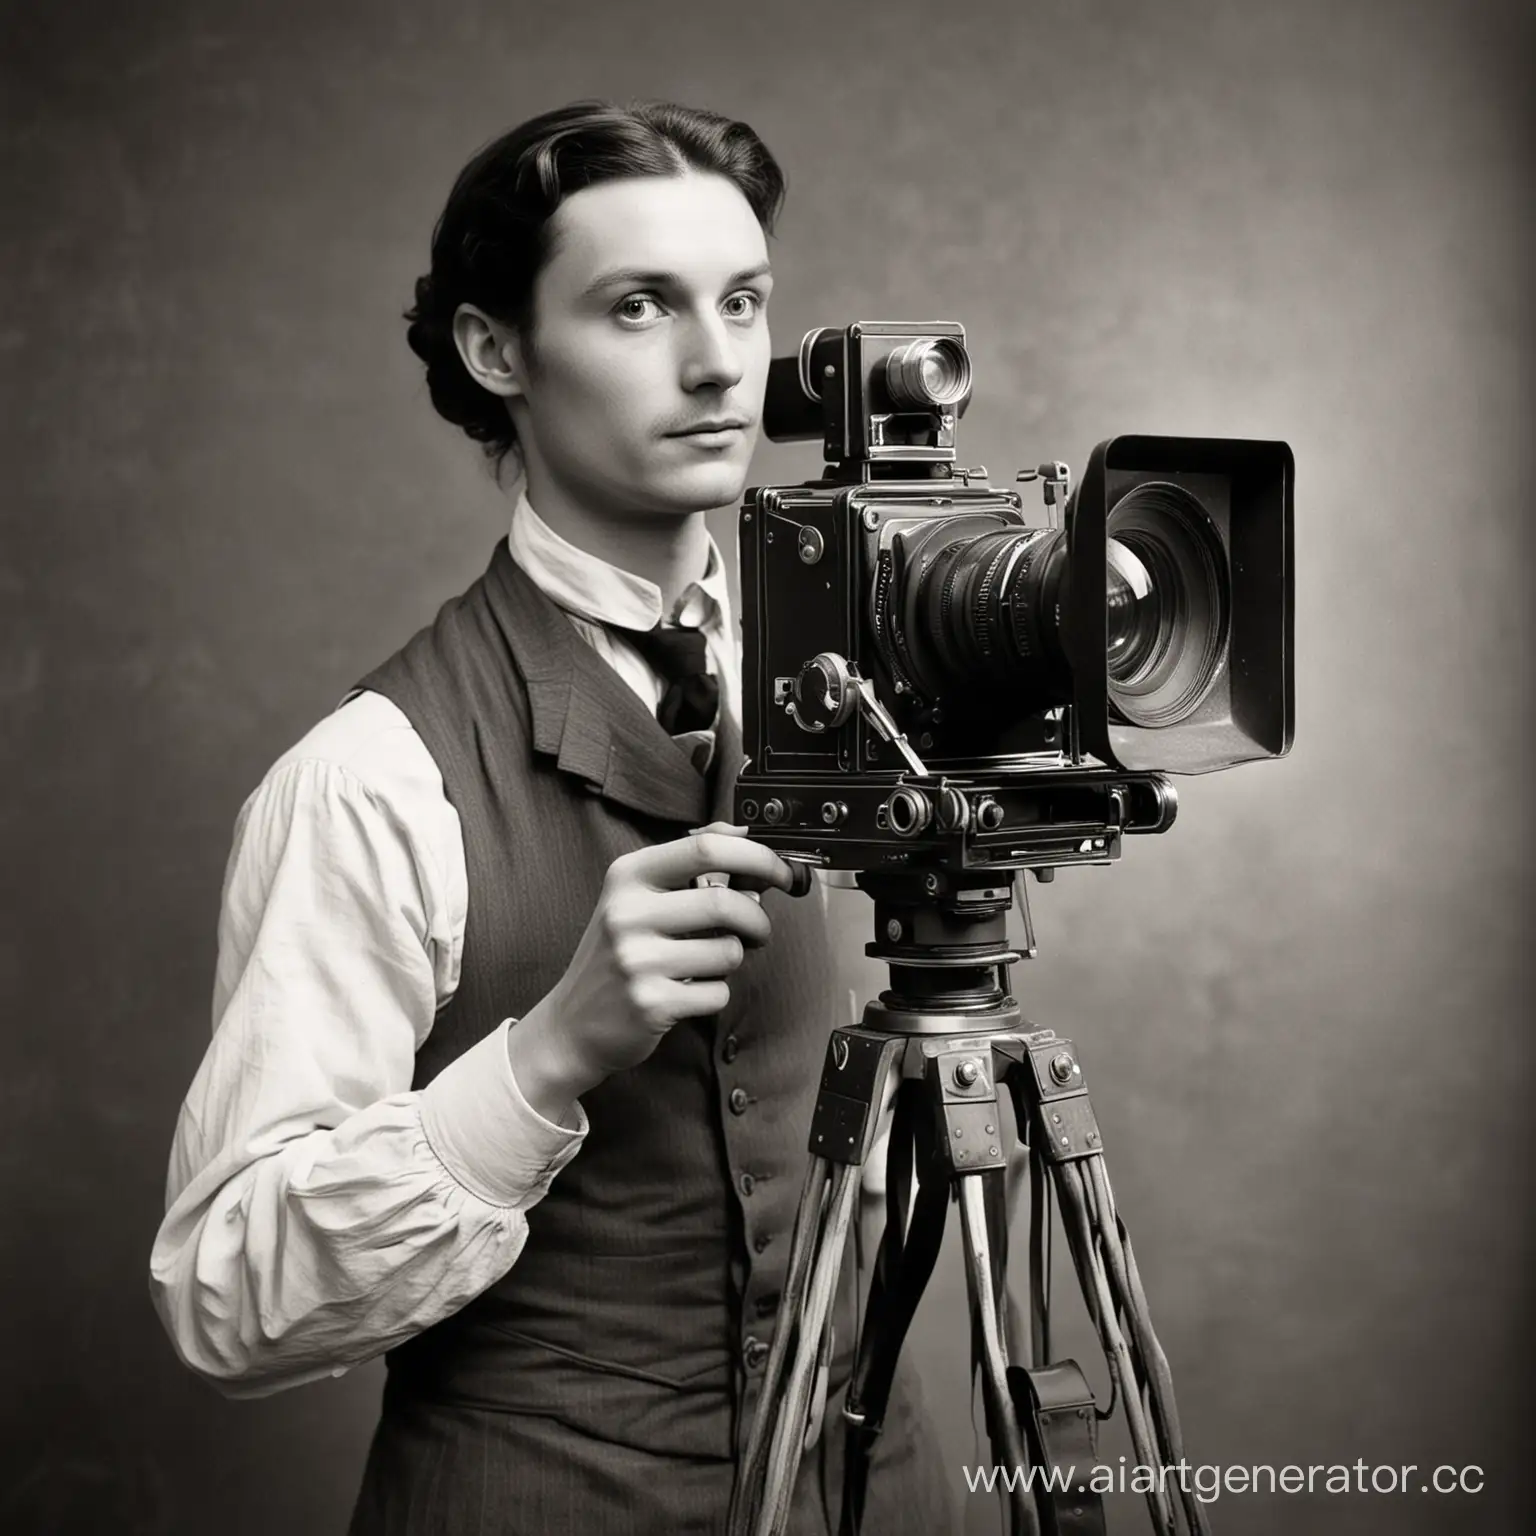 Victorian-Era-Film-Enthusiast-with-Vintage-Camera